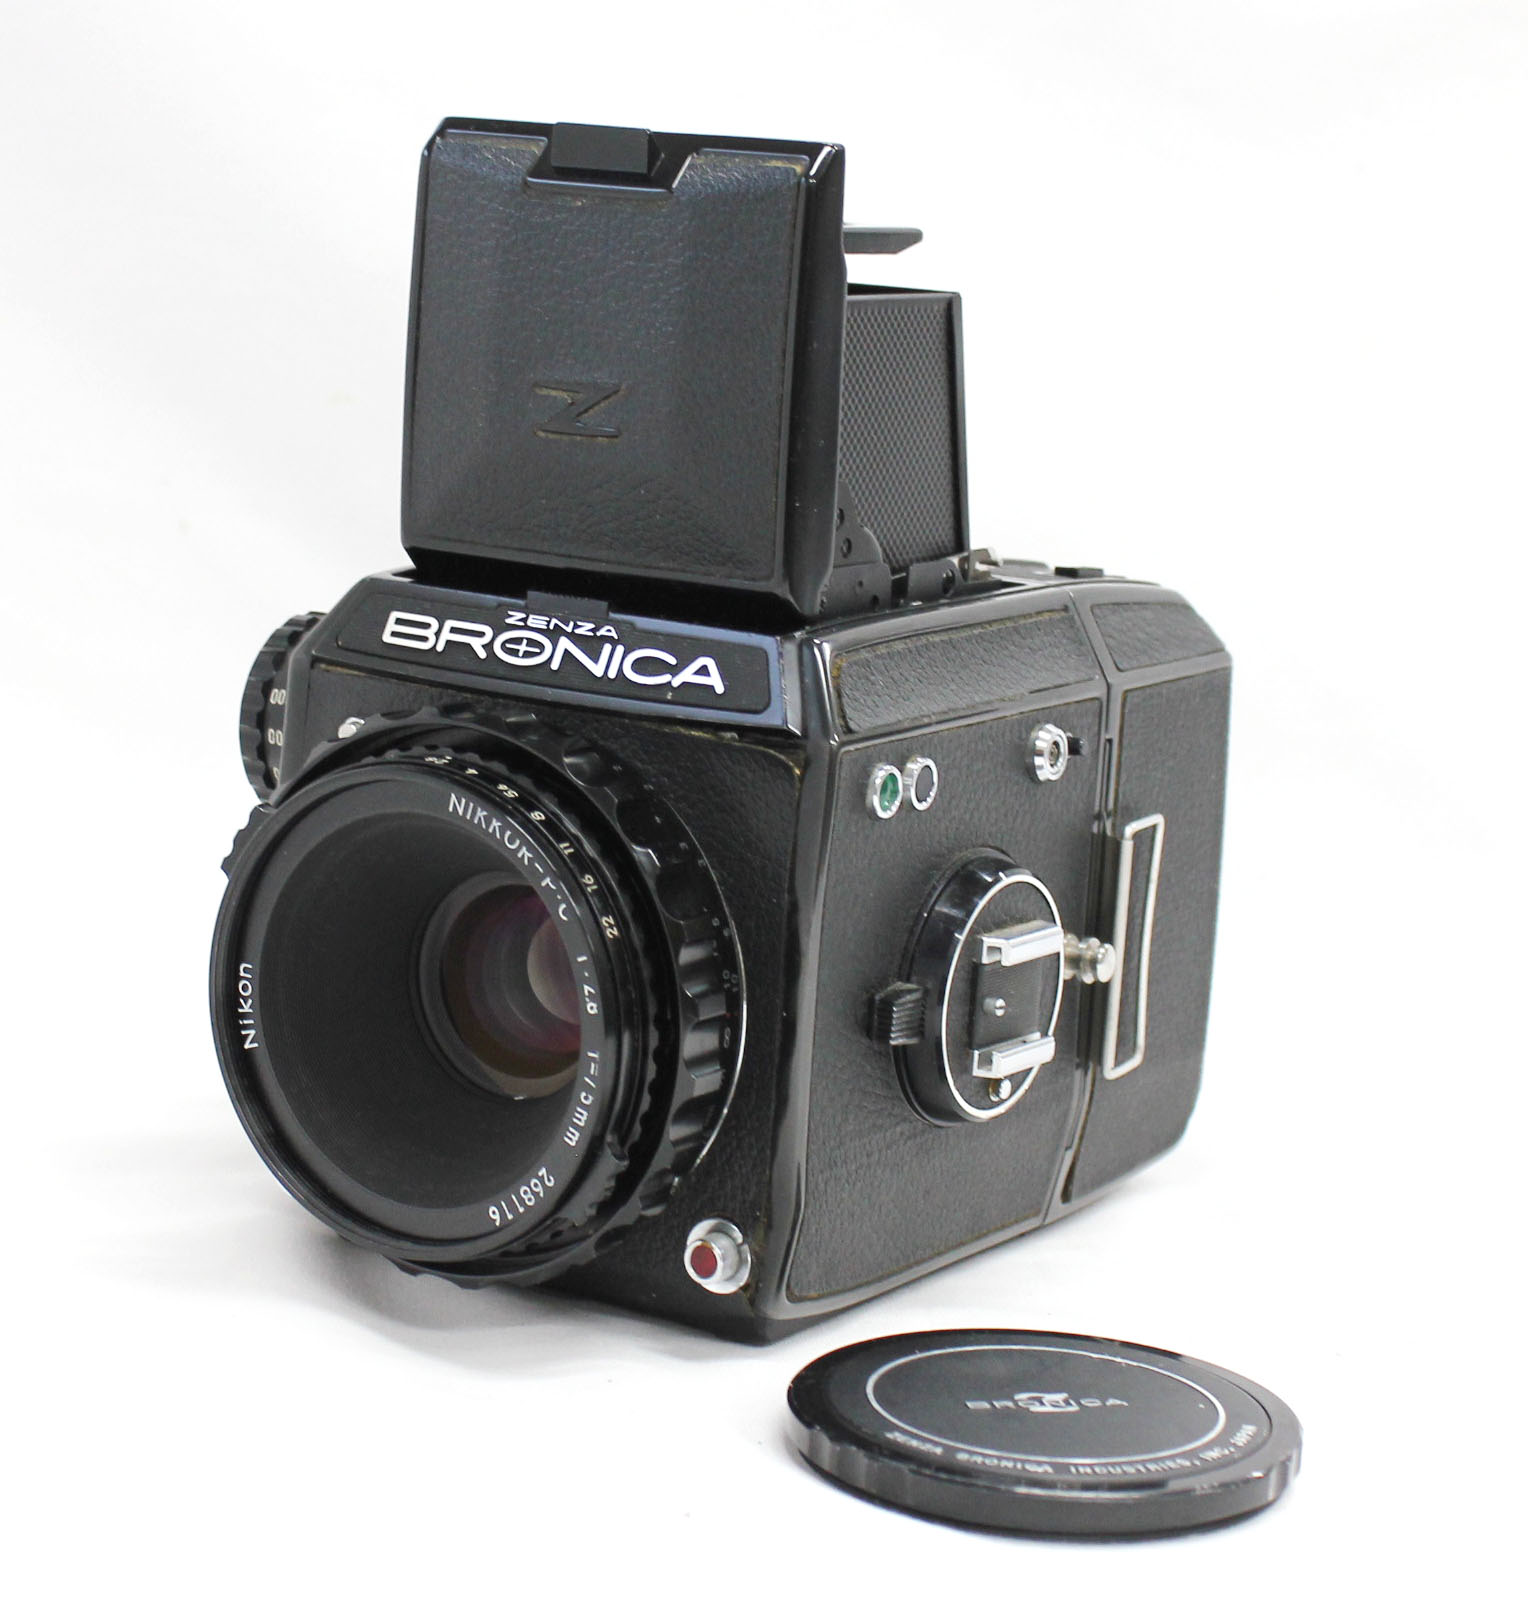  Zenza Bronica EC 6x6 Medium Format Camera w/ Nikkor-P.C 75mm F/2.8 Lens from Japan Photo 0